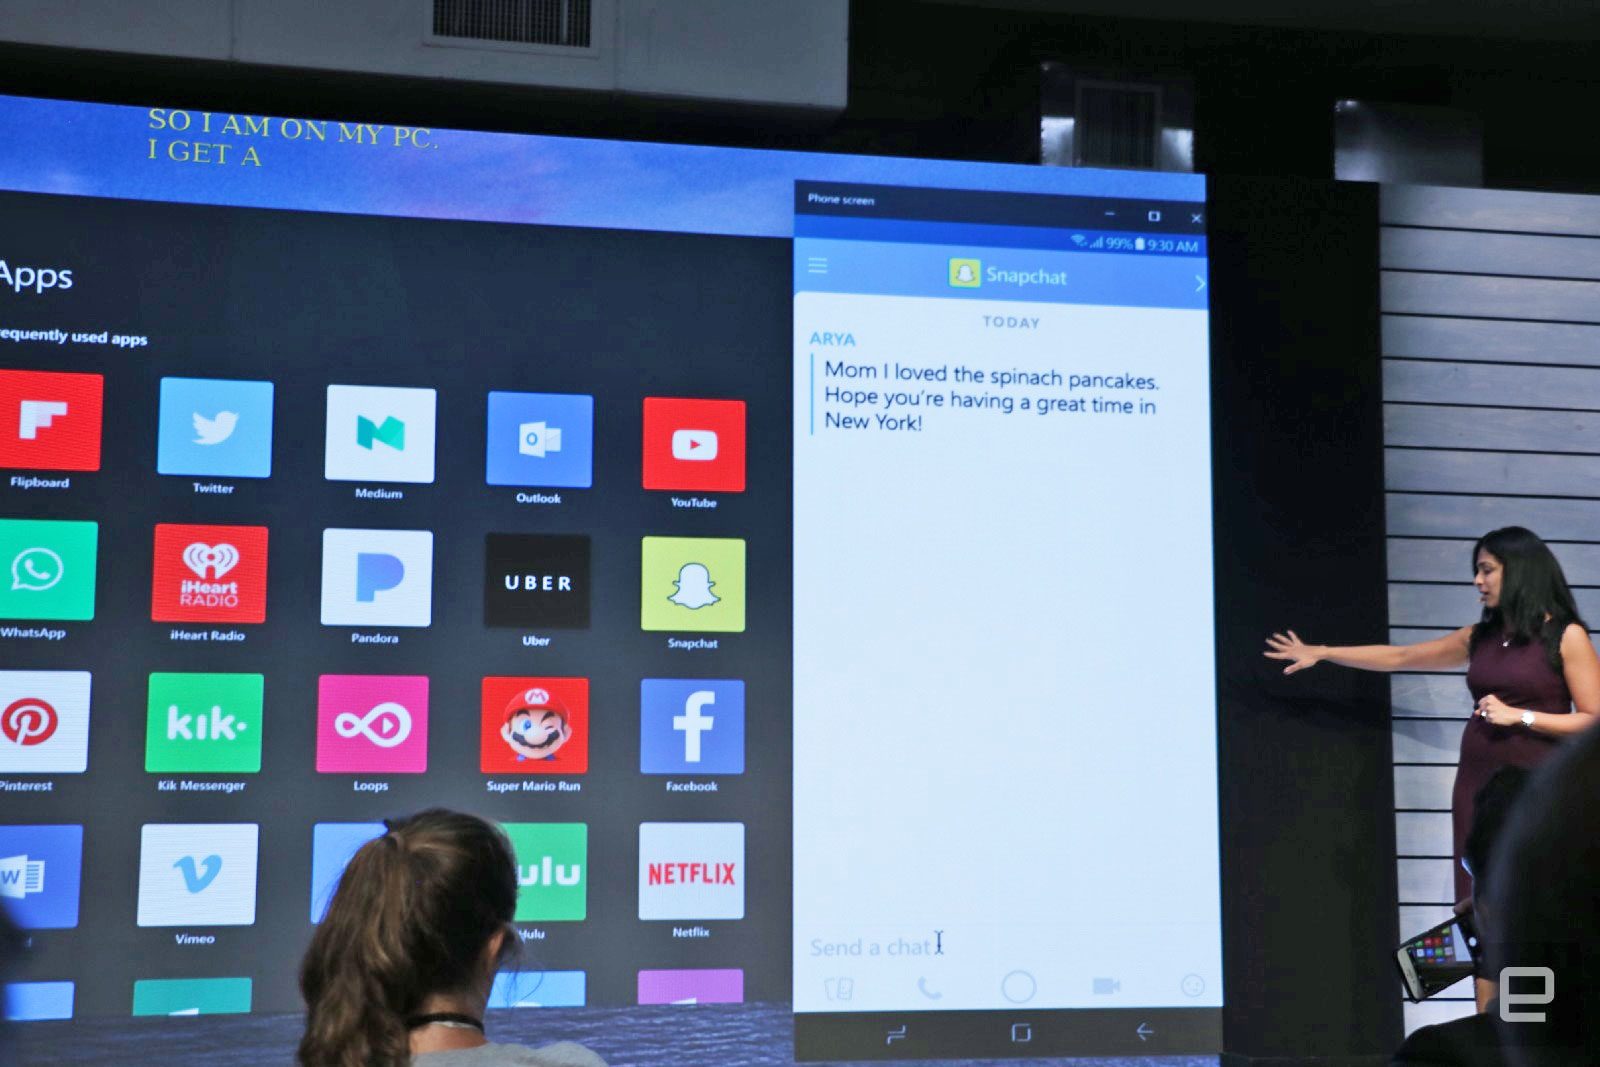 Windows 10 To Add Phone Screen Mirroring On Your Desktop